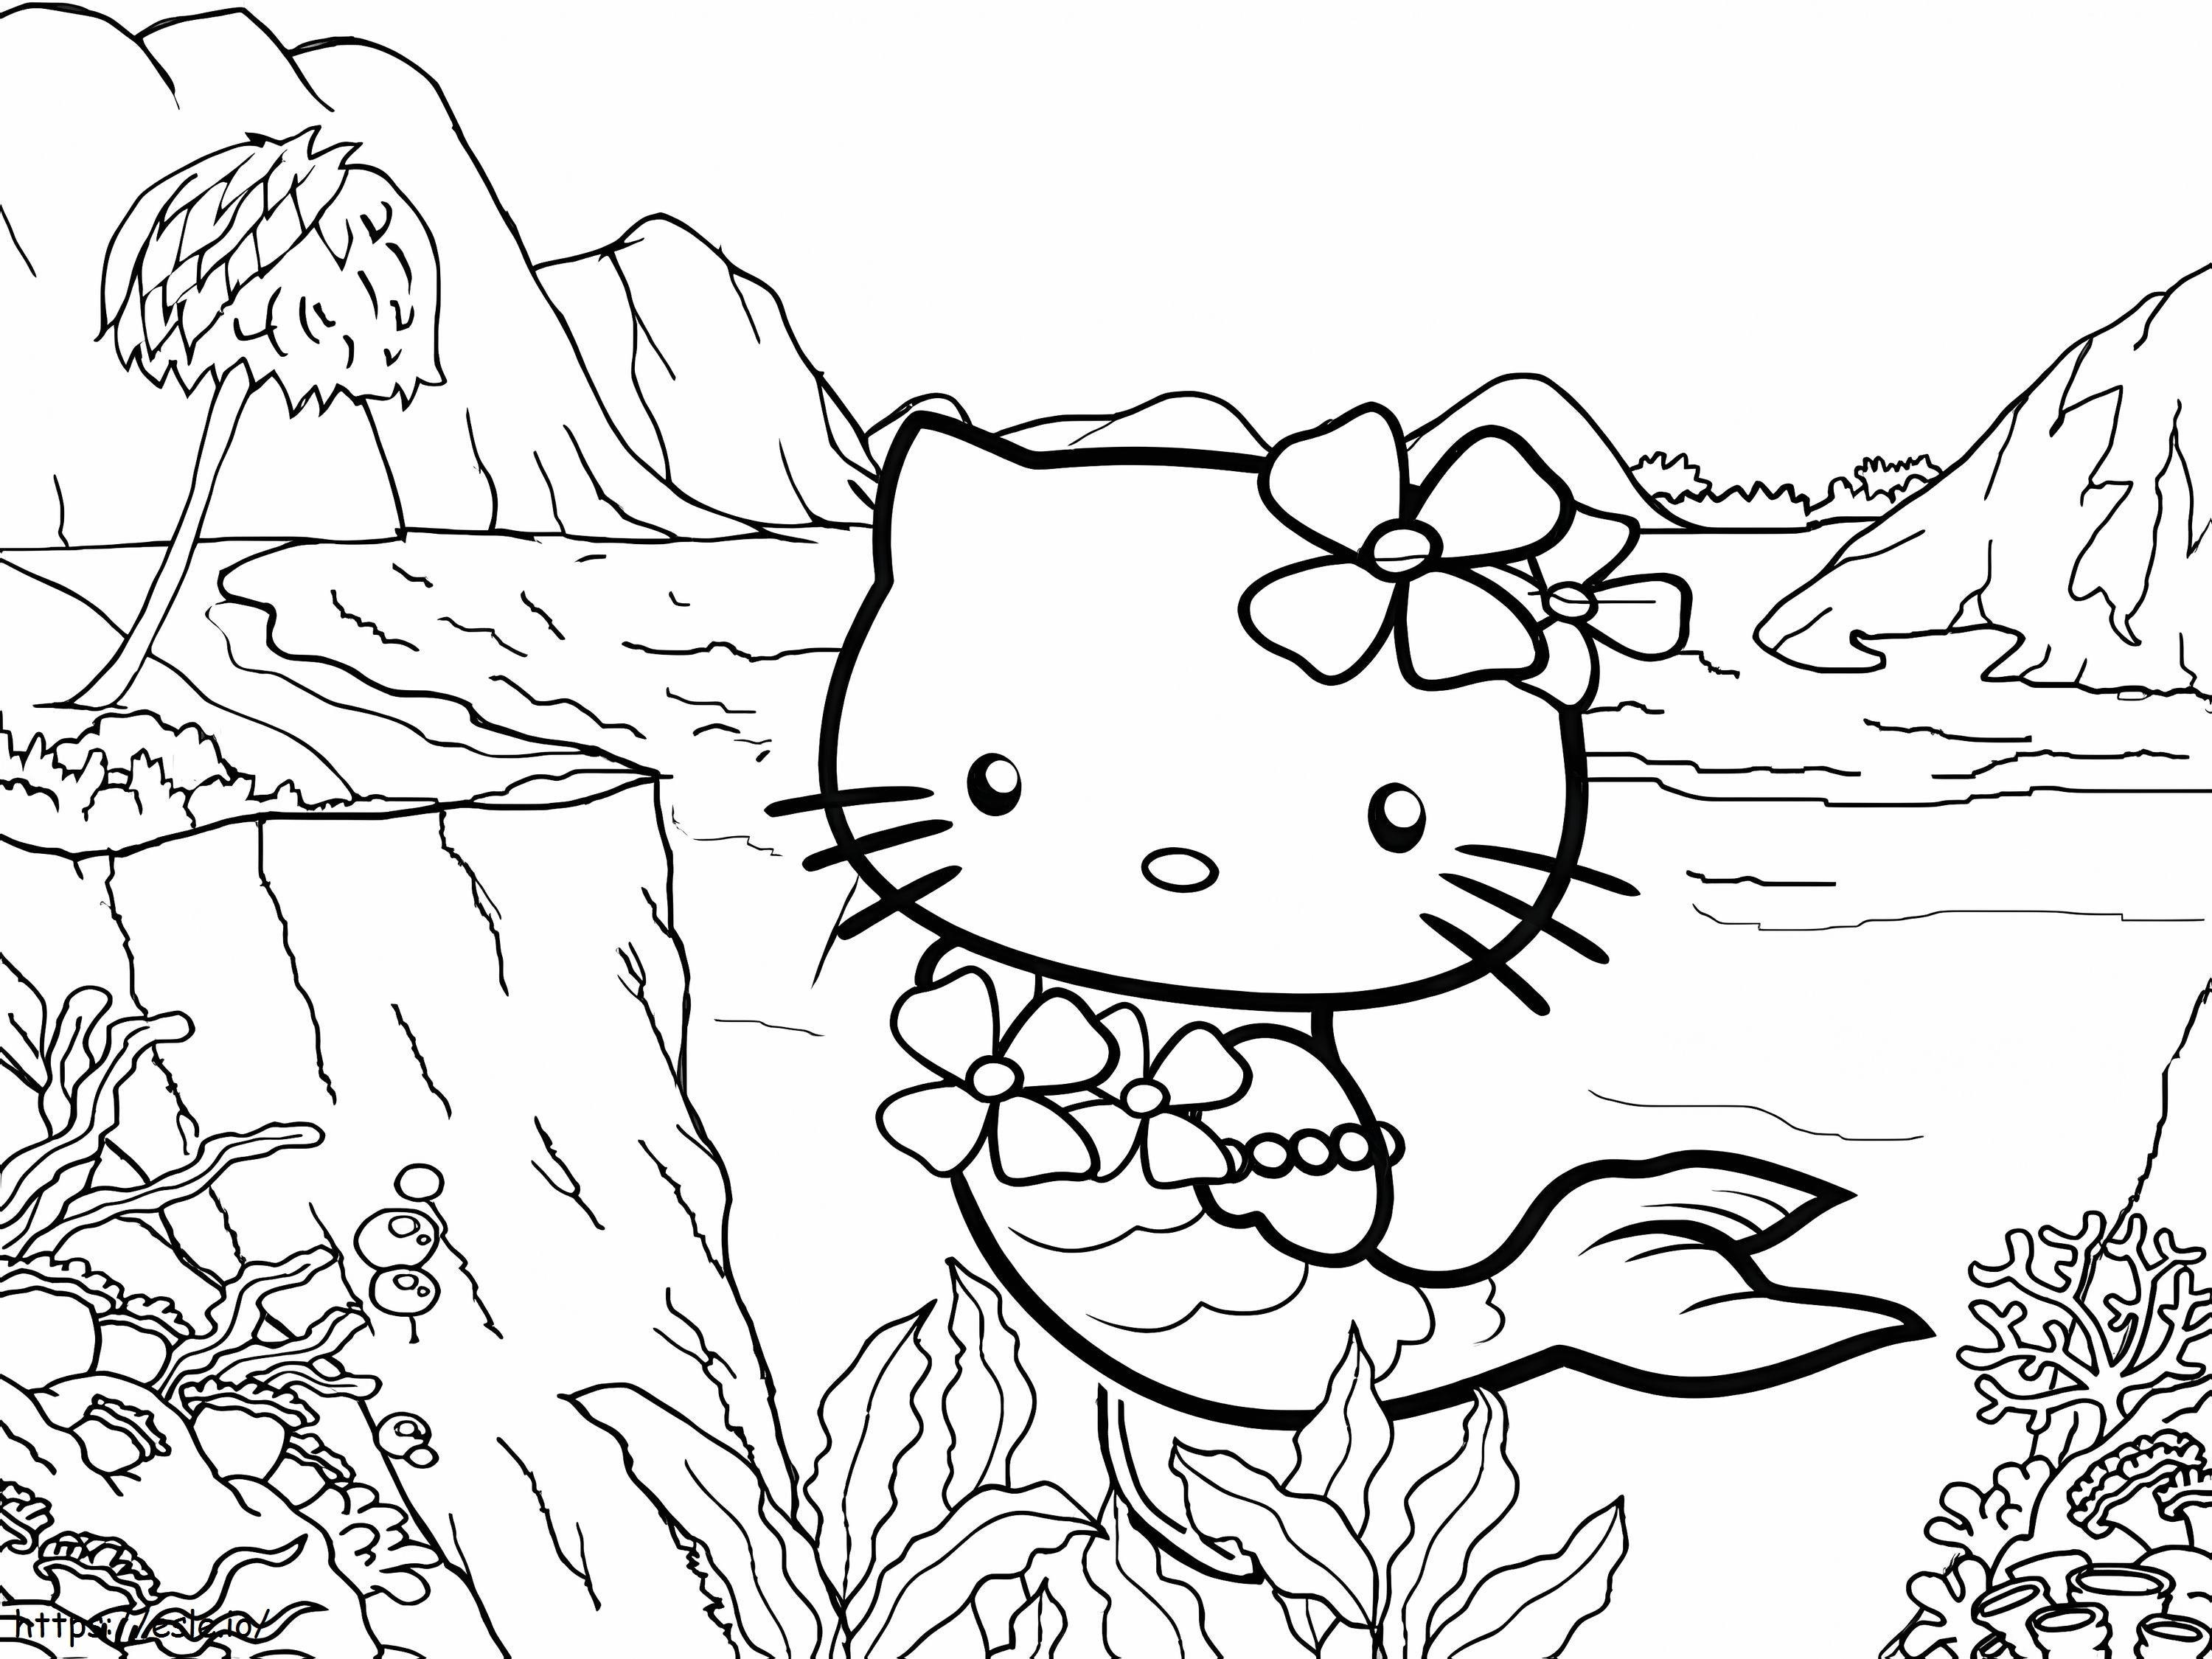 Mooie Hello Kitty zeemeermin kleurplaat kleurplaat